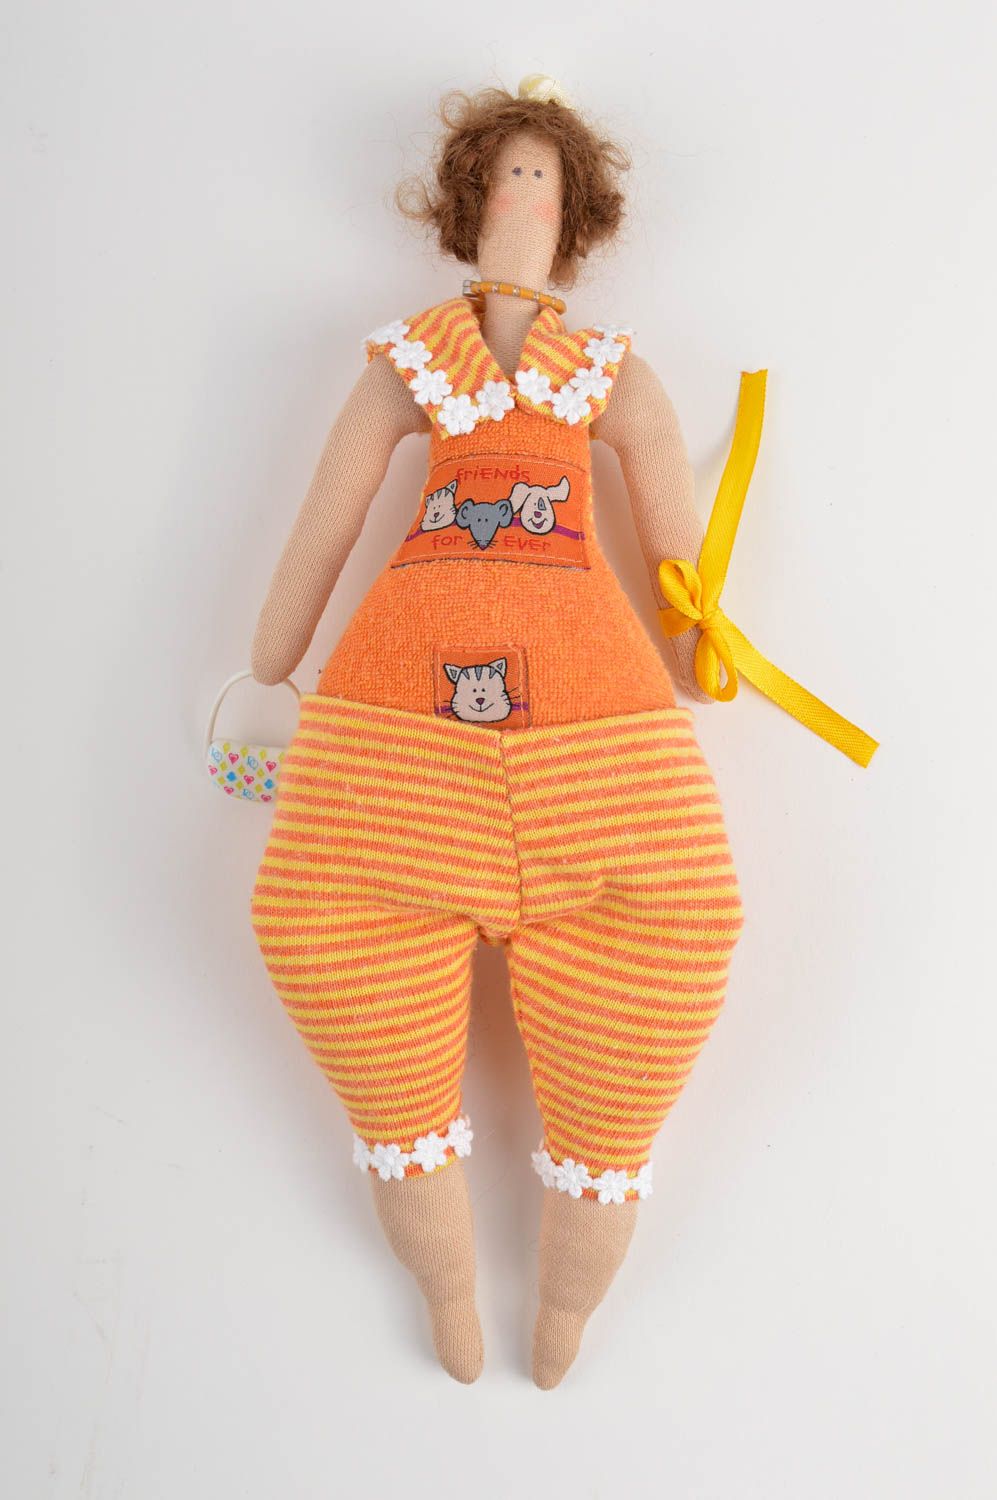 Handmade doll orange stuffed toy designer childrens toy decoration ideas photo 2